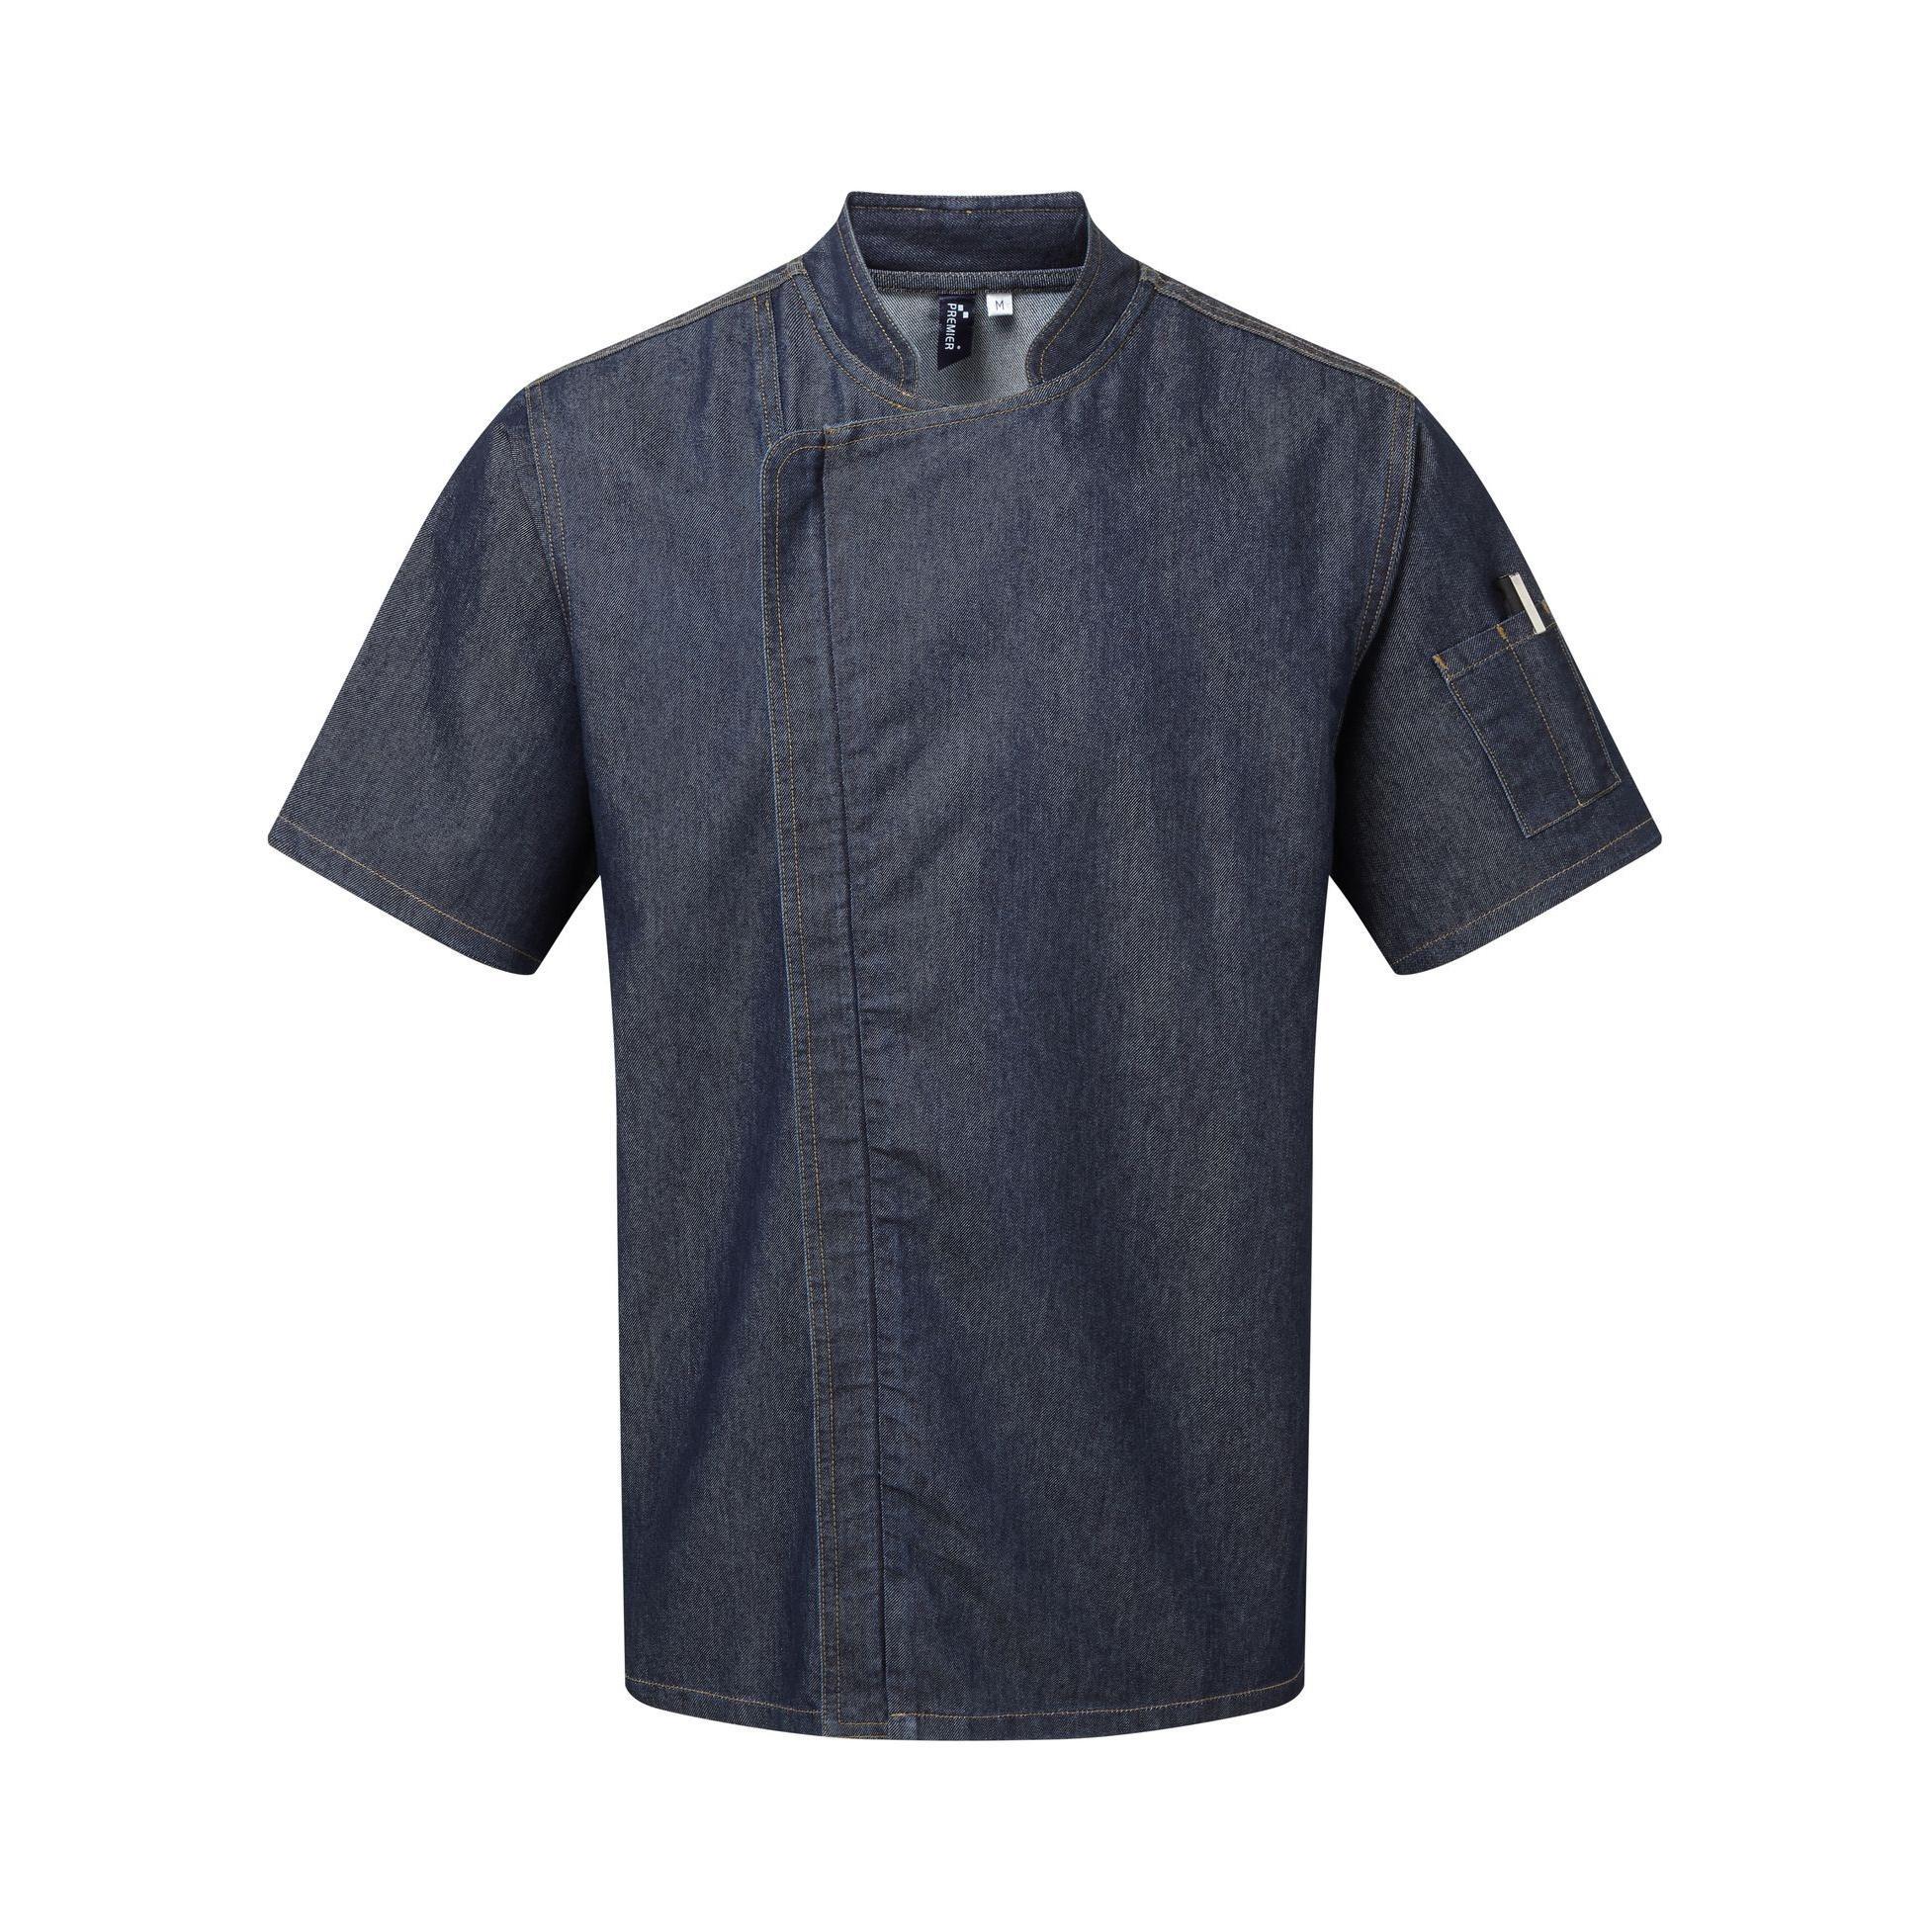 Premier Unisex Adults Chefs Zip-Close Short Sleeve Jacket (Indigo Denim) (L)